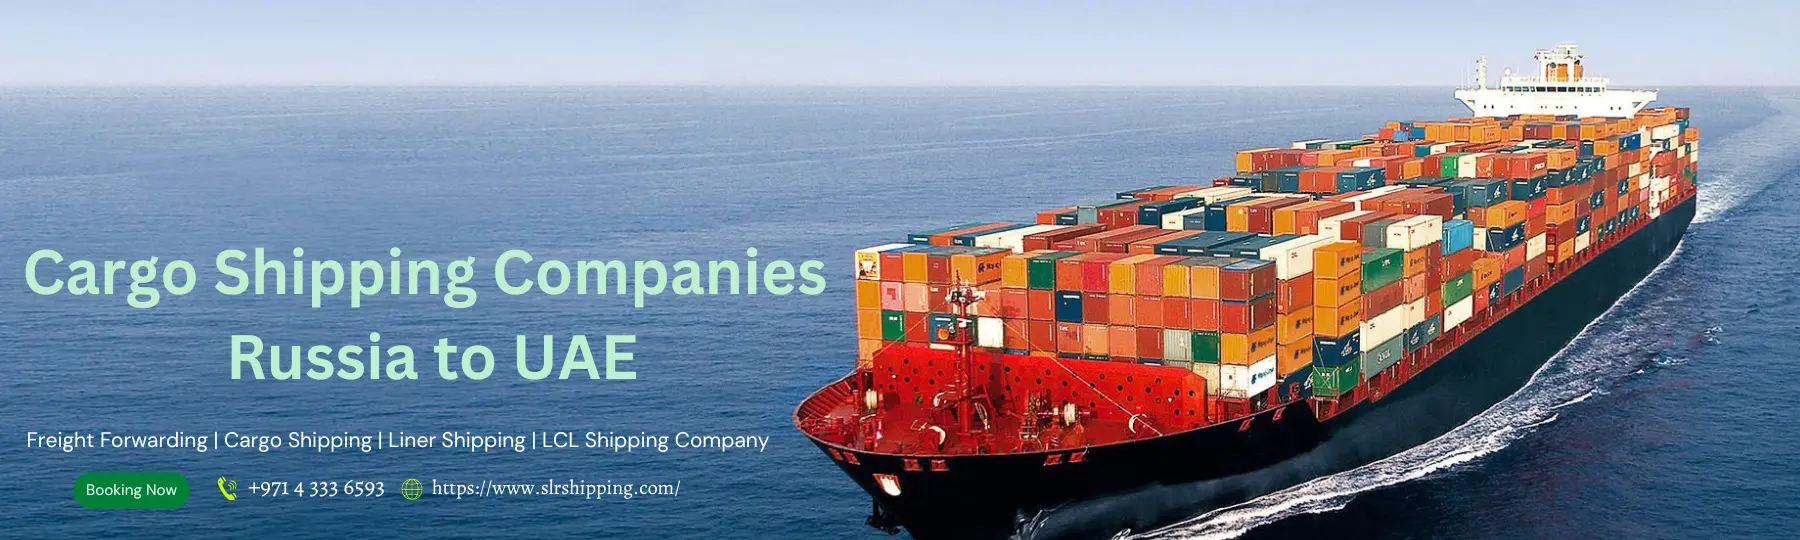 Cargo Shipping Companies Russia to UAE